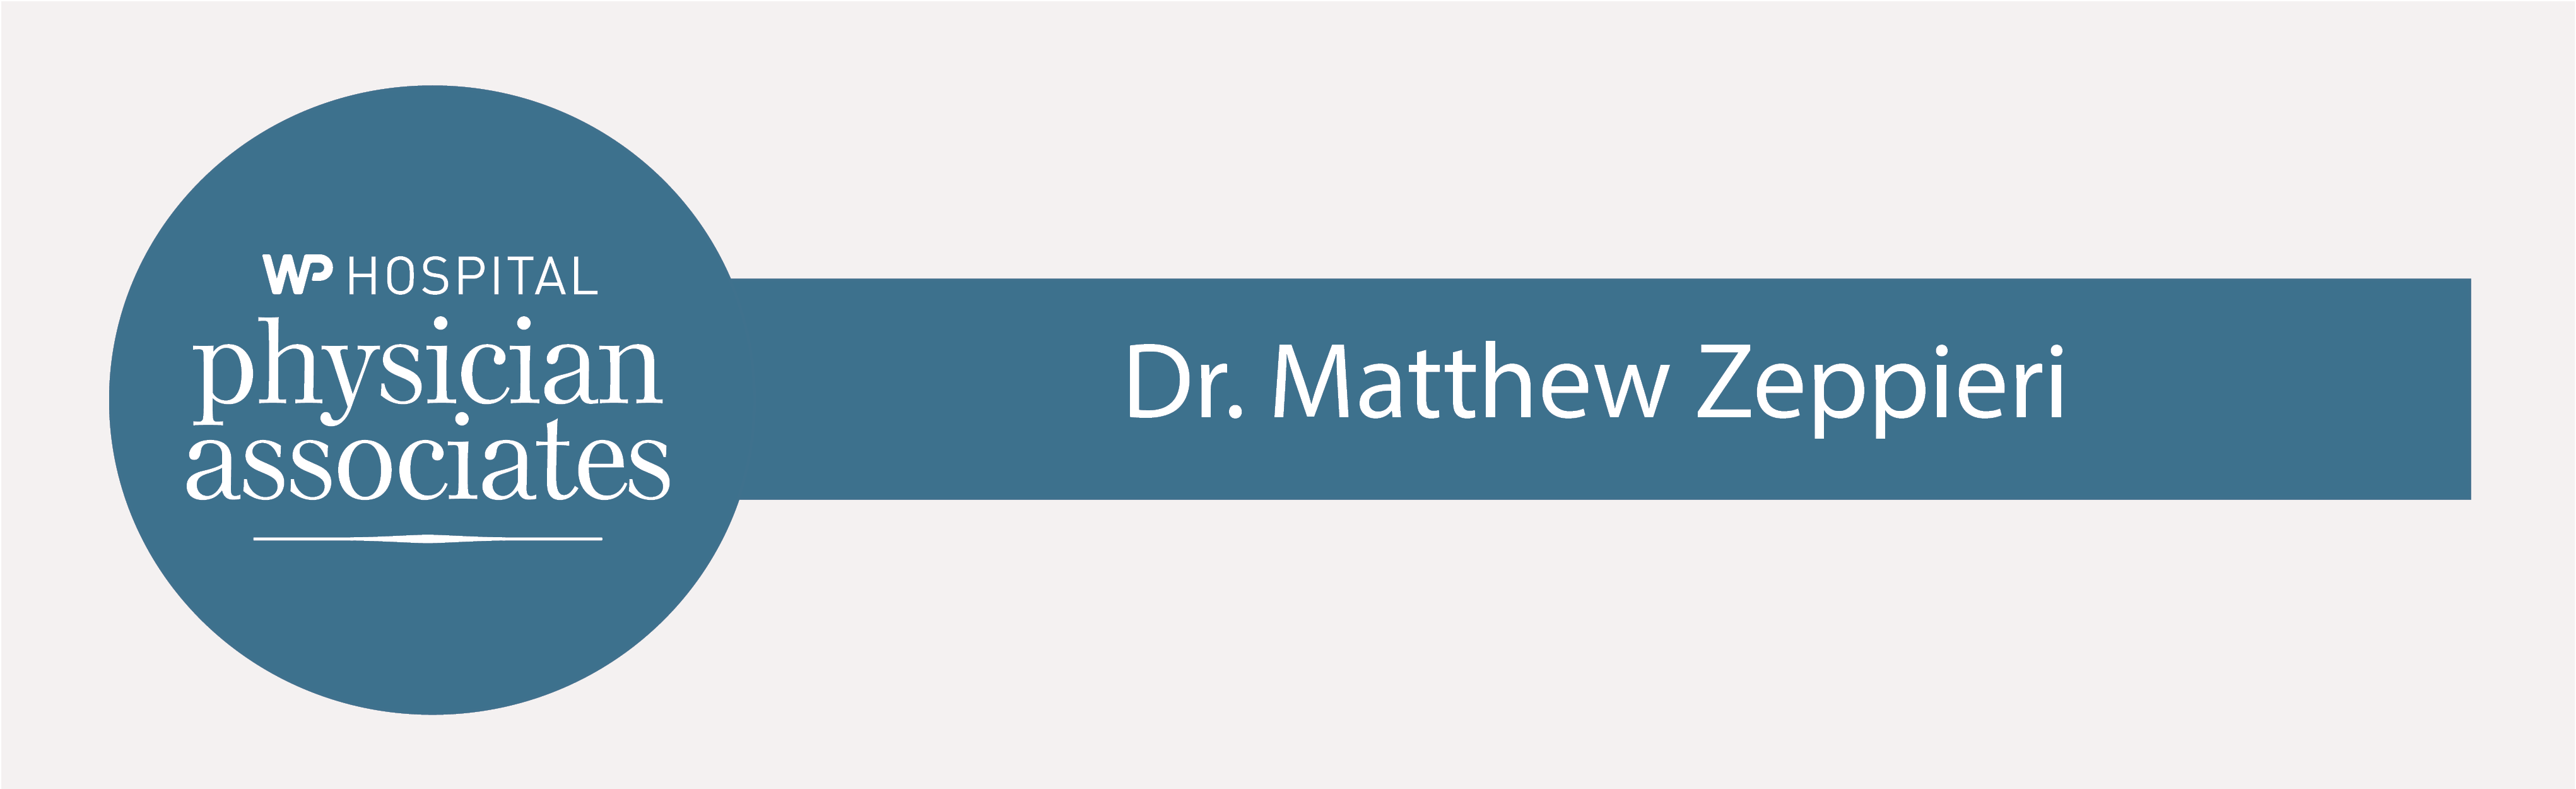 Family Medicine Physician Dr. Matthew Zeppieri Joins White Plains Hospital Physician Associates